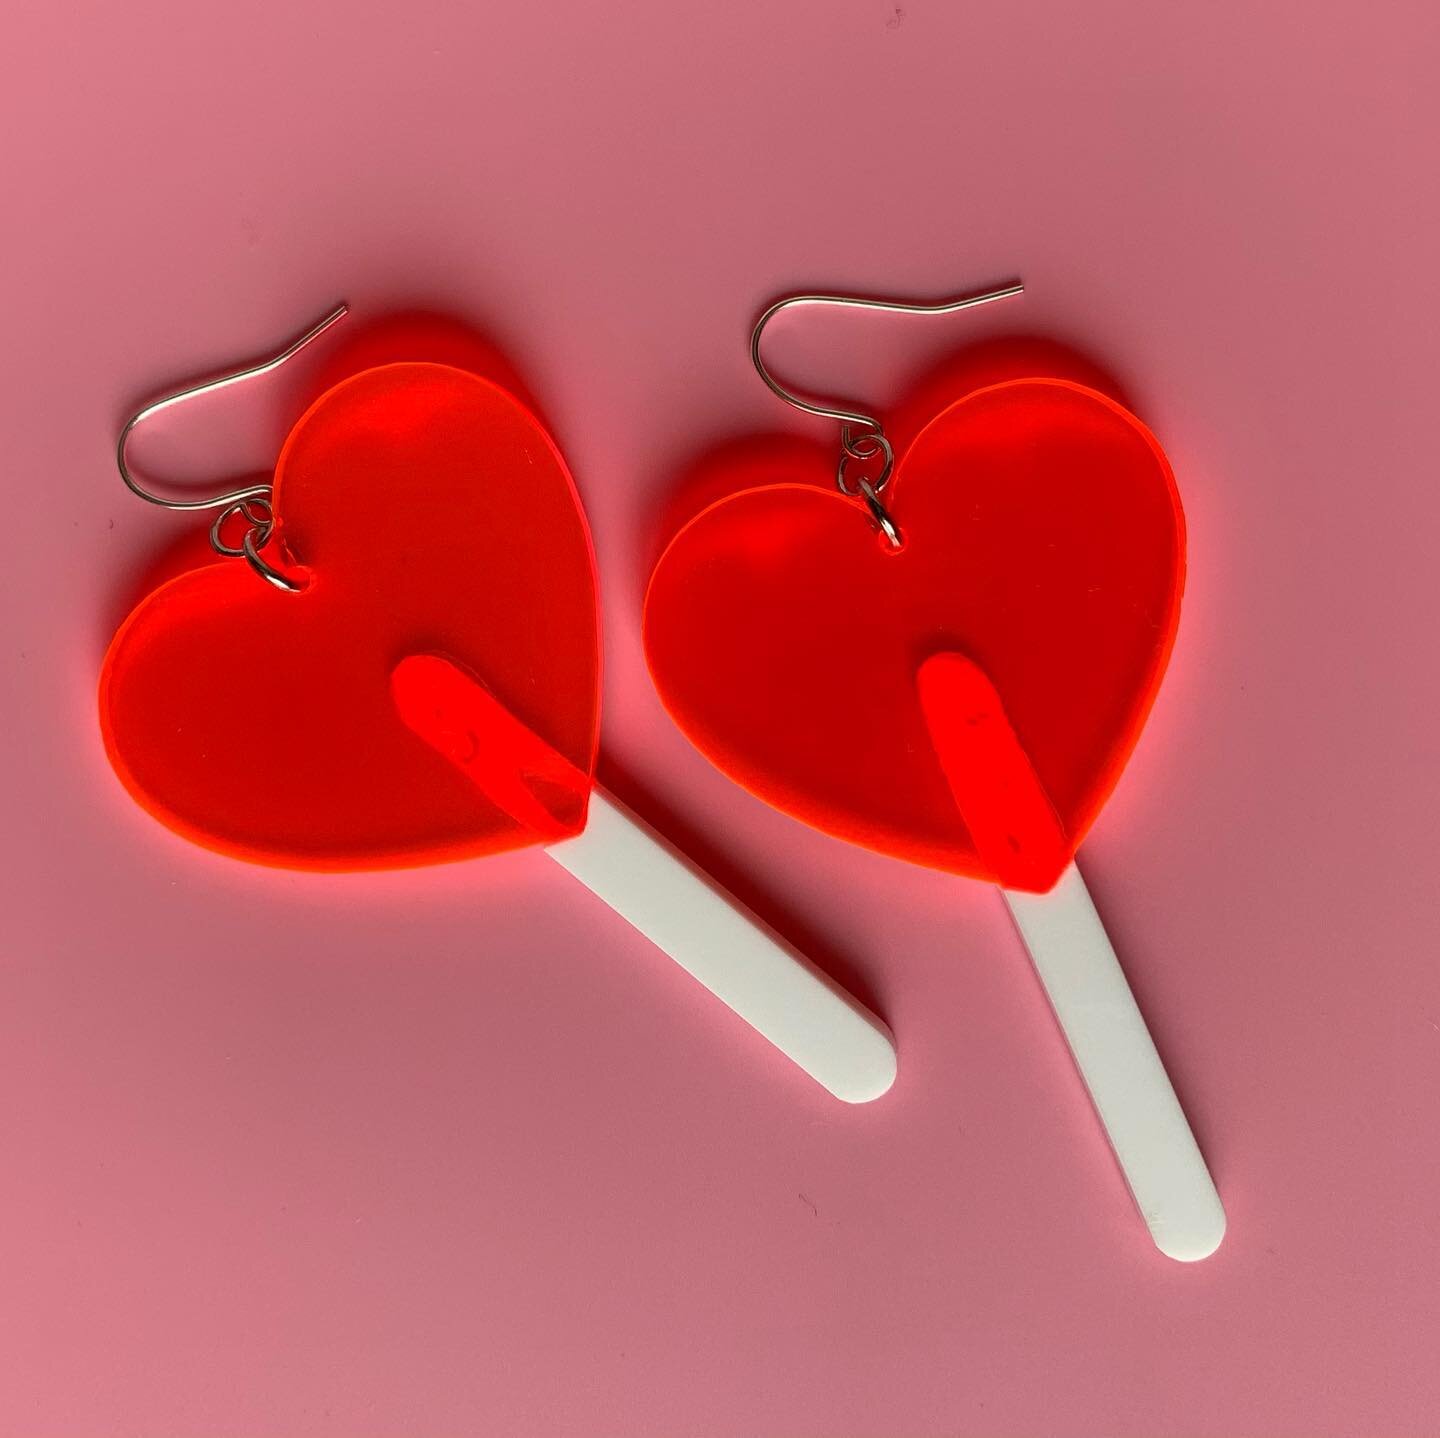 Heart Lolli Earrings 
2.5&rdquo; x 1.5&rdquo;
$15
.
.
.
#rijiddesigns #earrings #heart #lollipop #valentinesday #acrylic #gift #candy #gta #toronto #shoplocal #shopsmall #smallbusiness